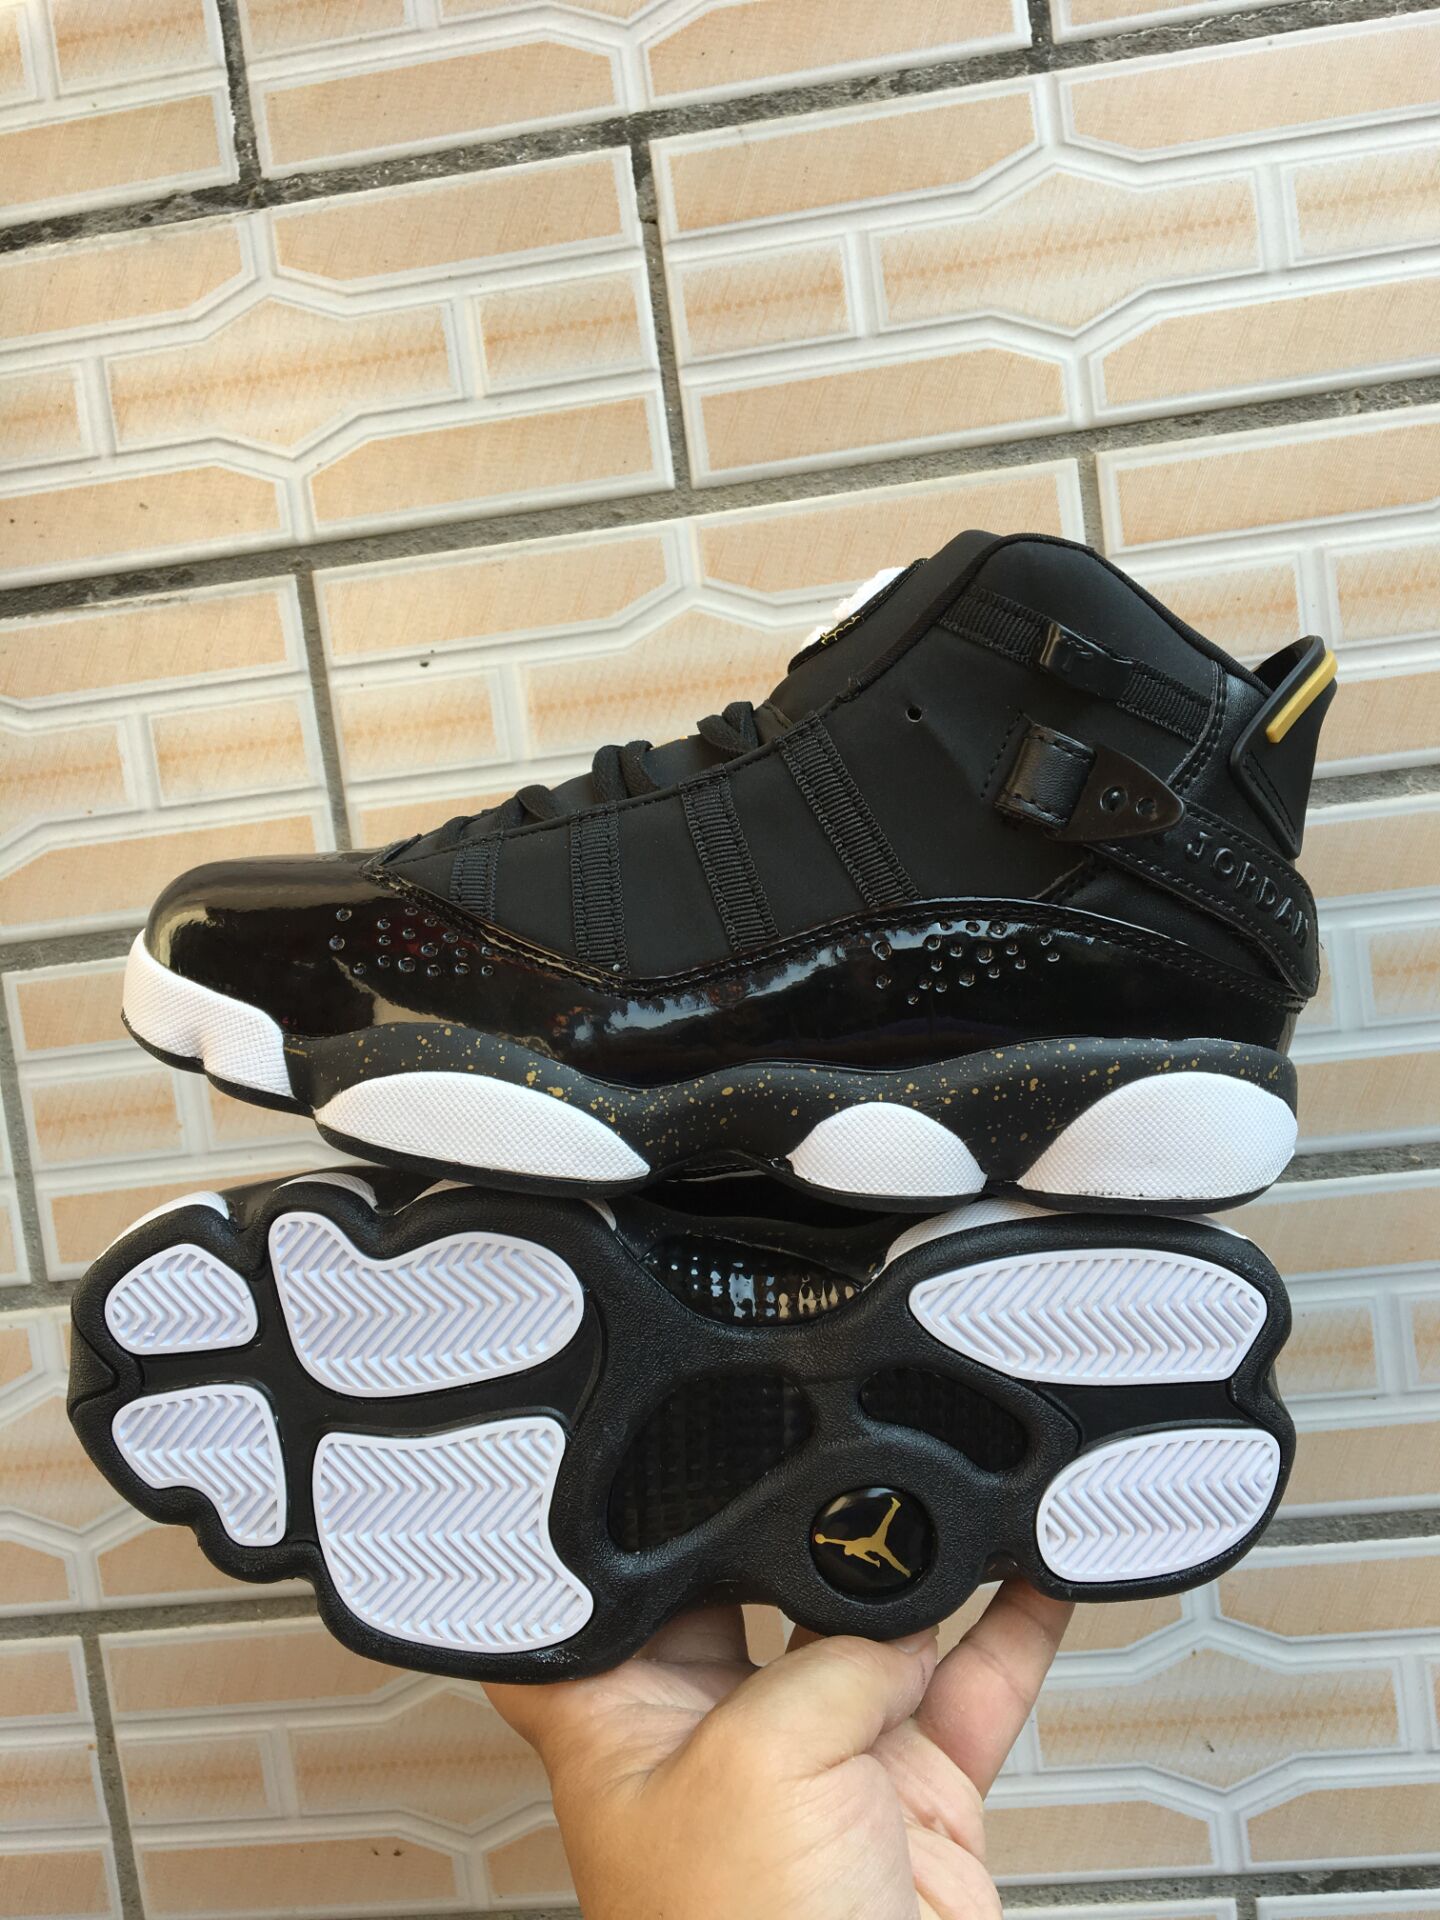 New Air Jordan Six Rings Black White Yellow Shoes